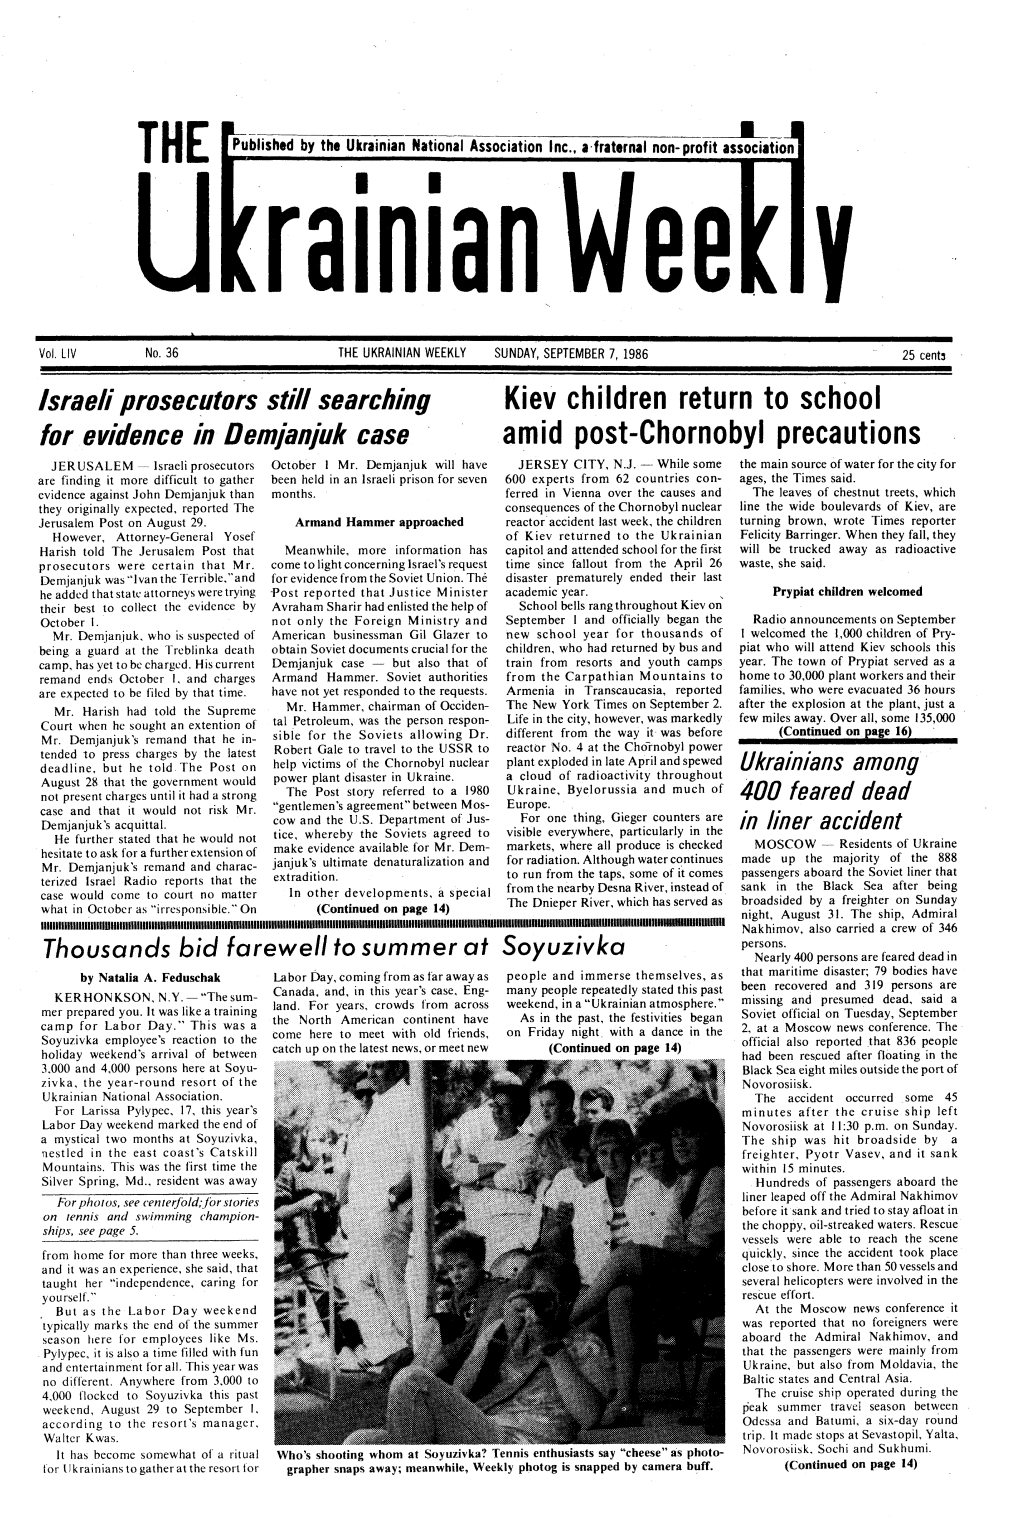 The Ukrainian Weekly 1986, No.36